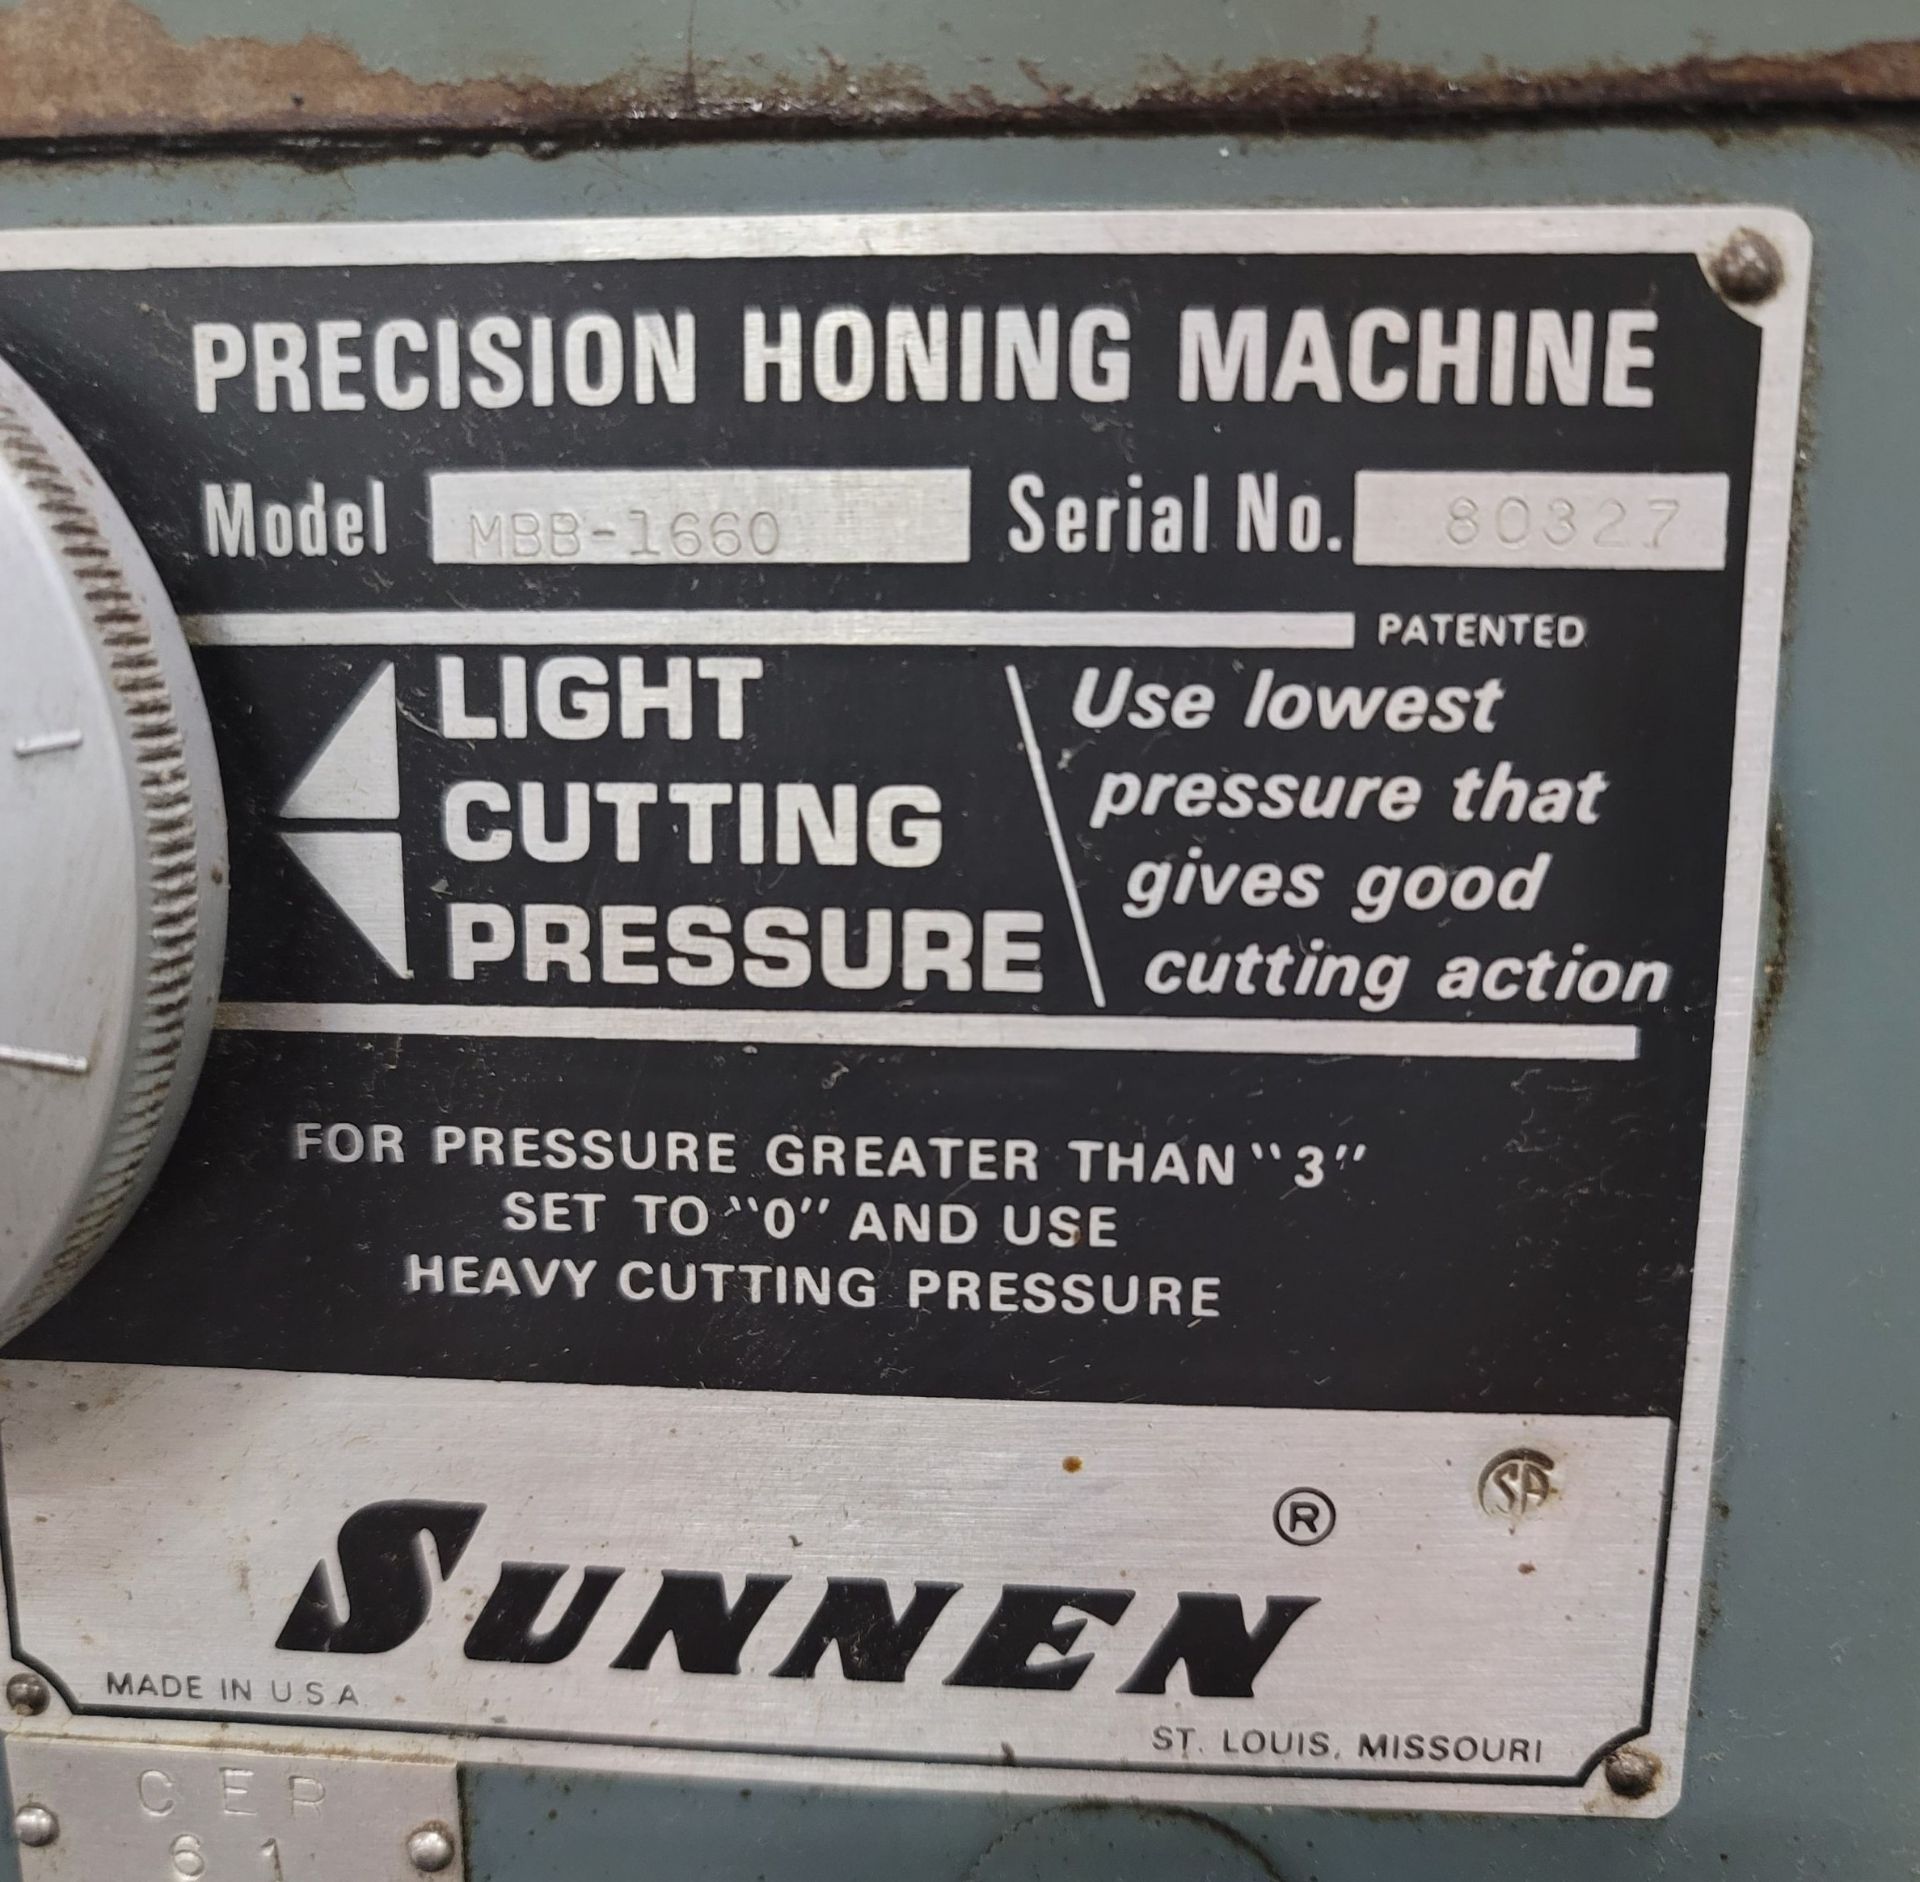 SUNNEN MBB-1660 PRECISION HONING MACHINE, S/N 80327 - Image 6 of 6